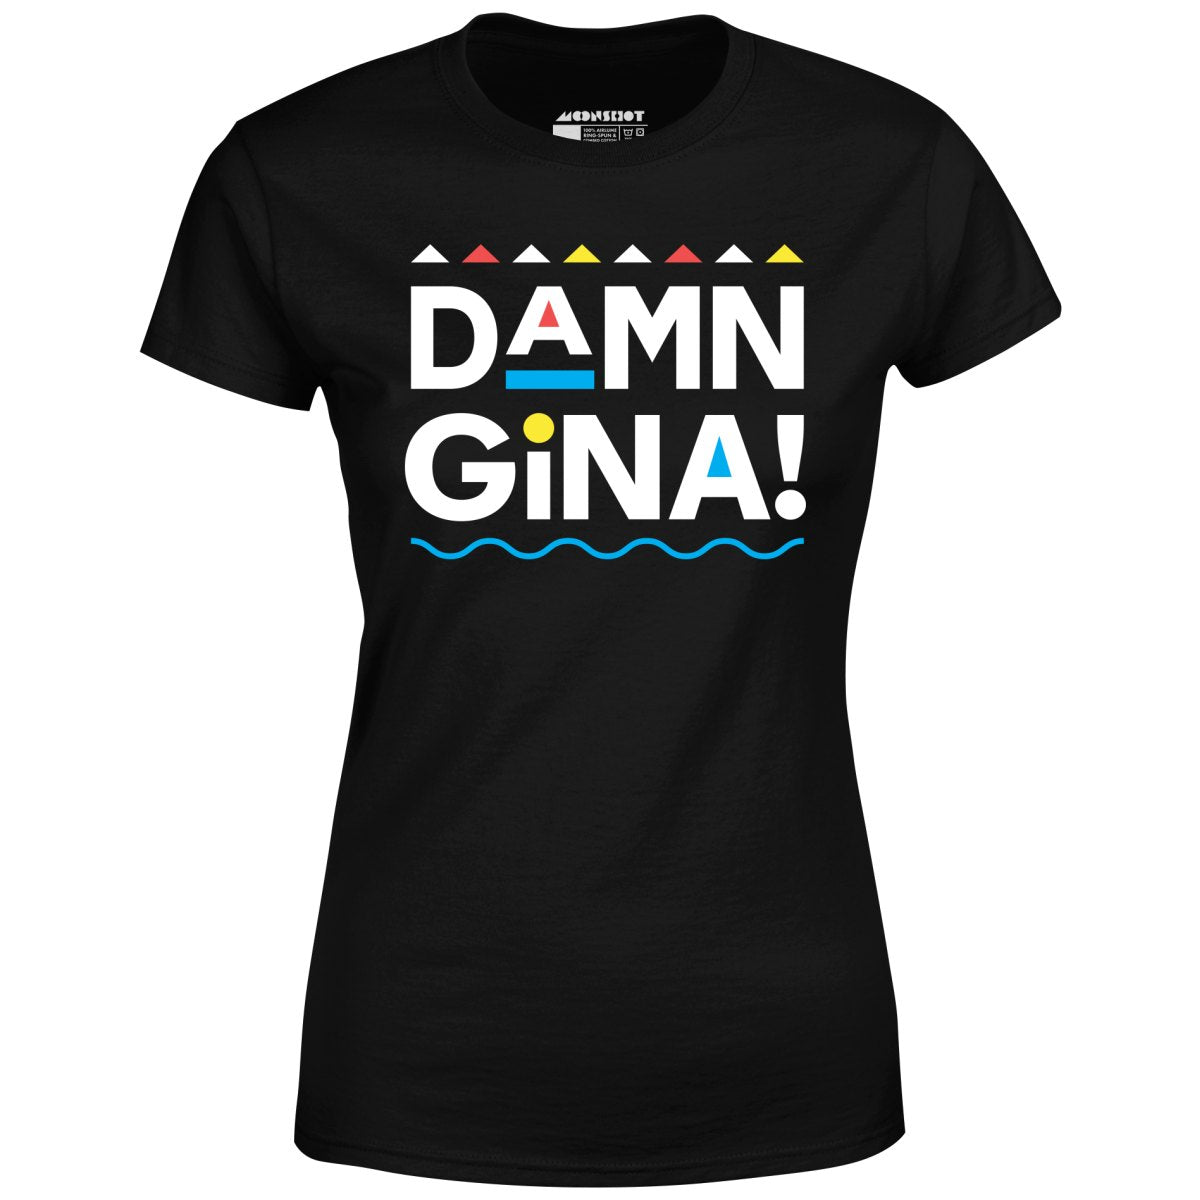 Damn Gina! - Women's T-Shirt